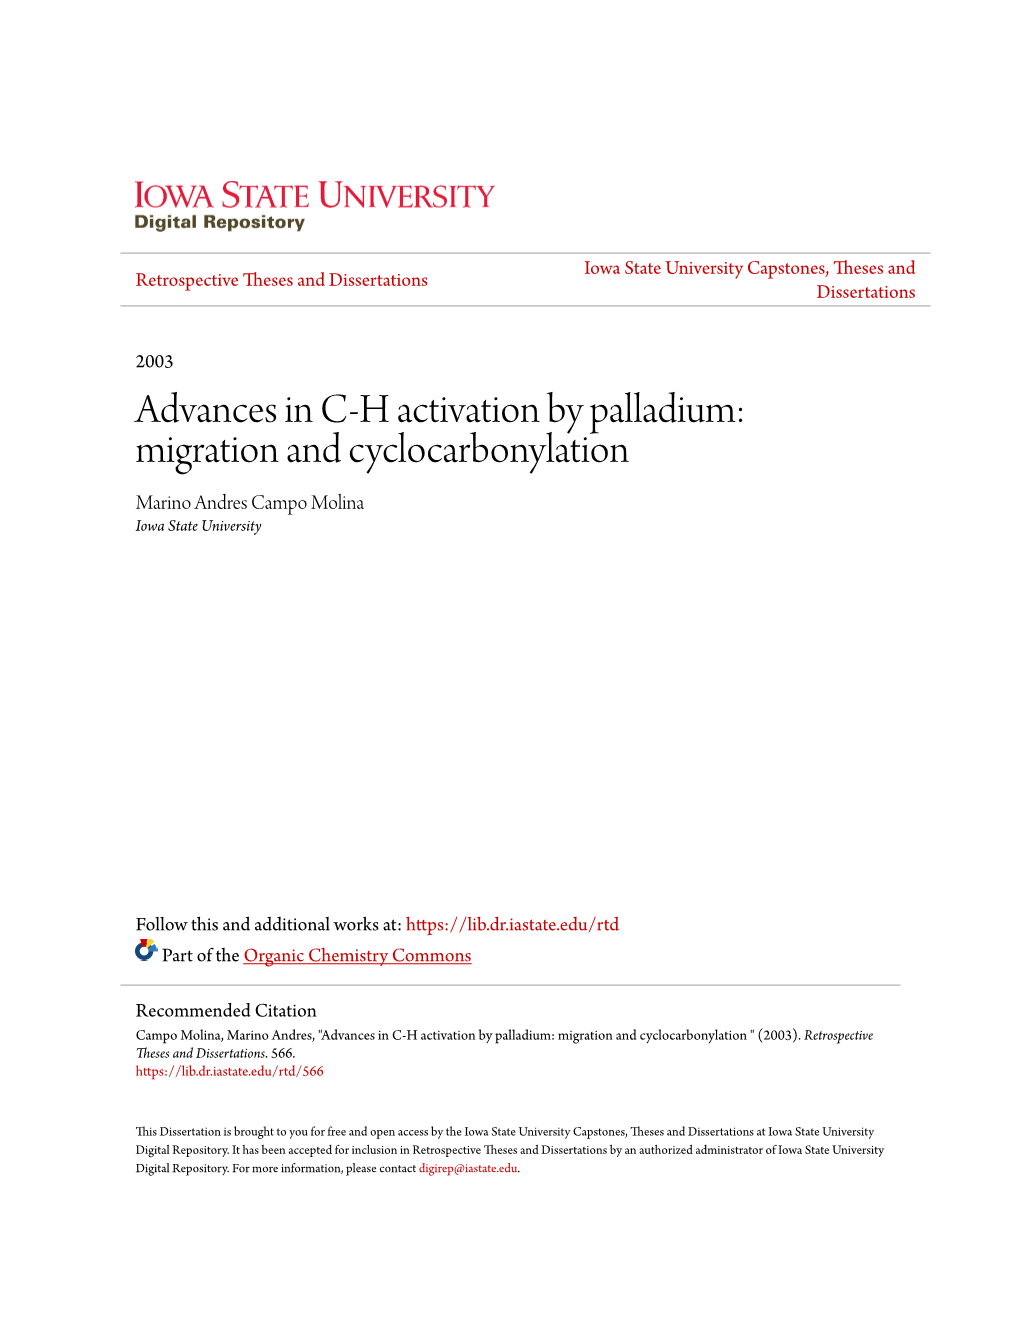 Migration and Cyclocarbonylation Marino Andres Campo Molina Iowa State University